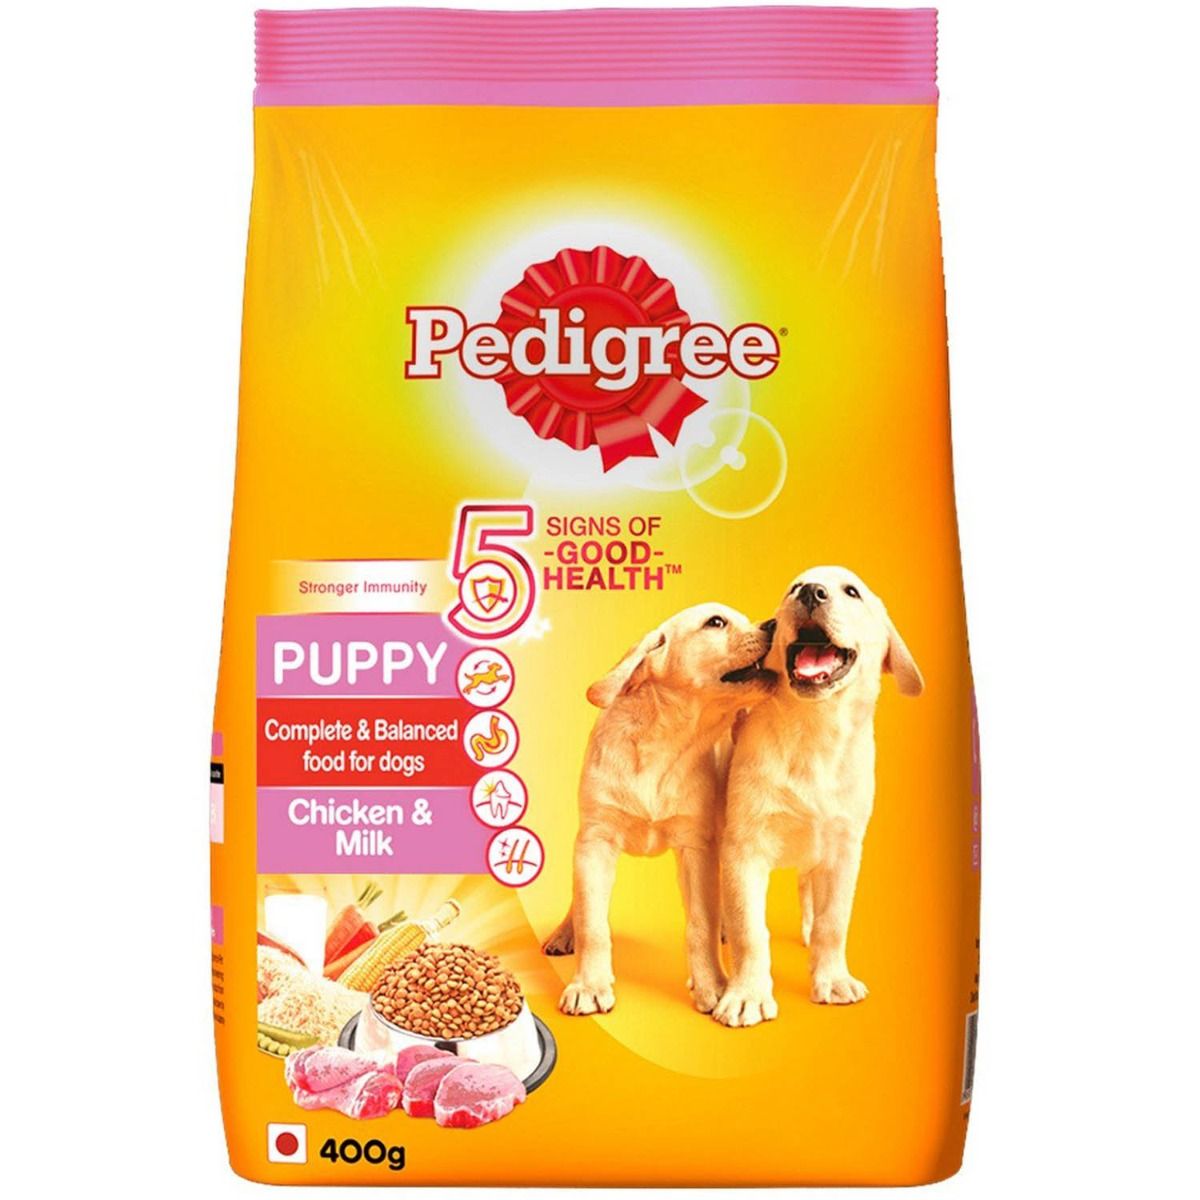 Pedigree Puppy Dog Food With Chicken & Milk, 400 gm, Pack of 1 